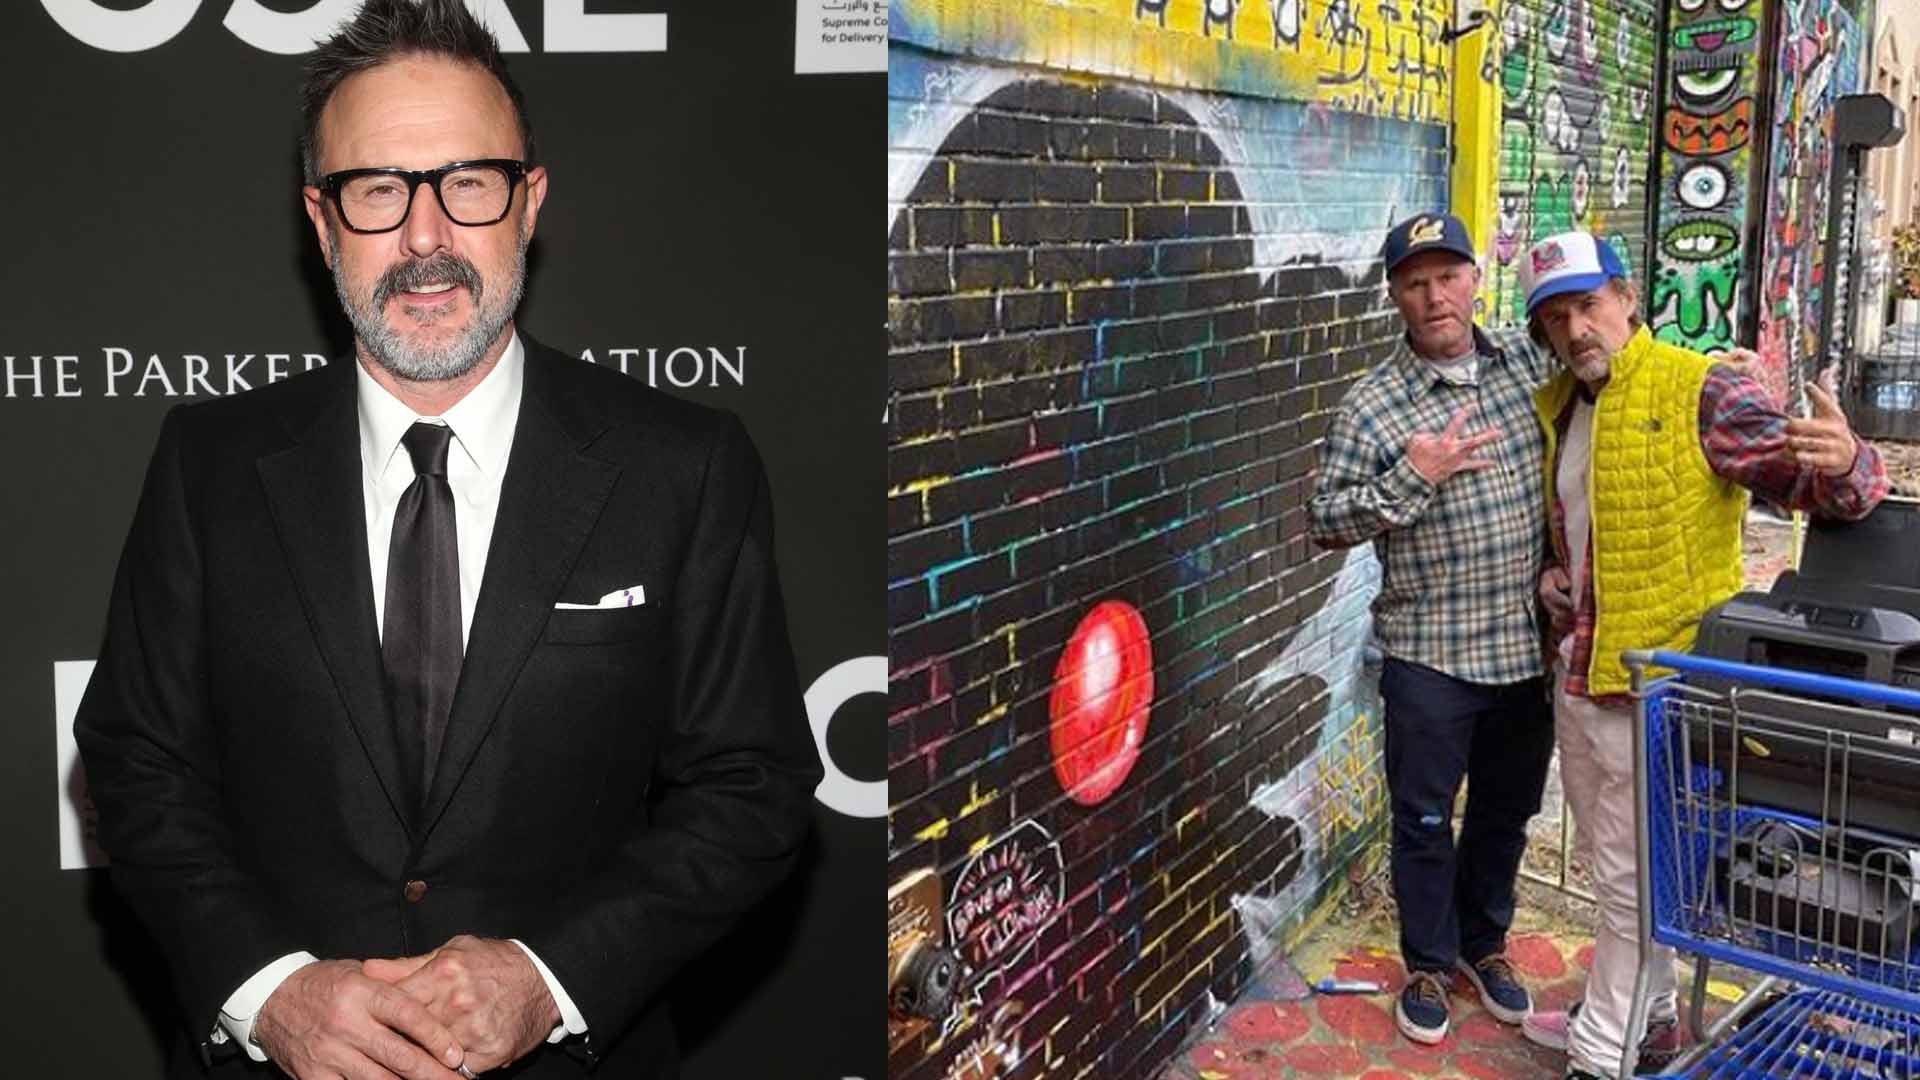 David Arquette Reveals He's Also A Graffiti Artist, Calls His Crew 'Kids Gone Bad'